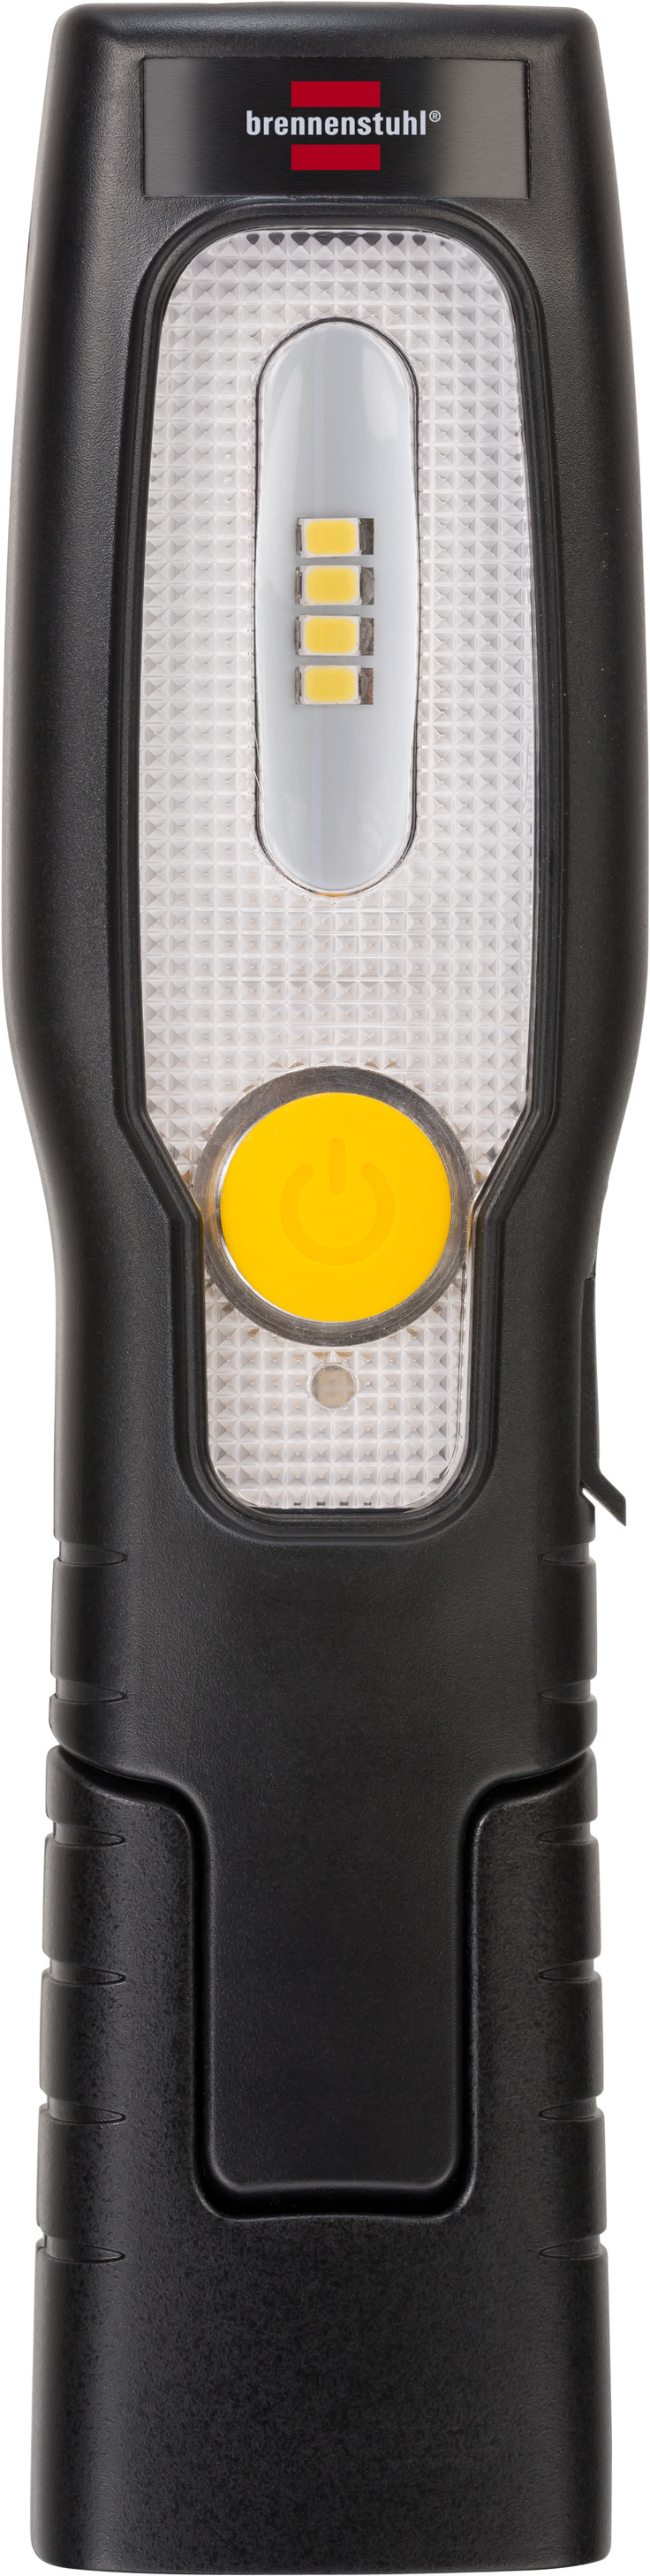 LED Akku-Handleuchte HL 200 A 250+70lm, knickbar | brennenstuhl®